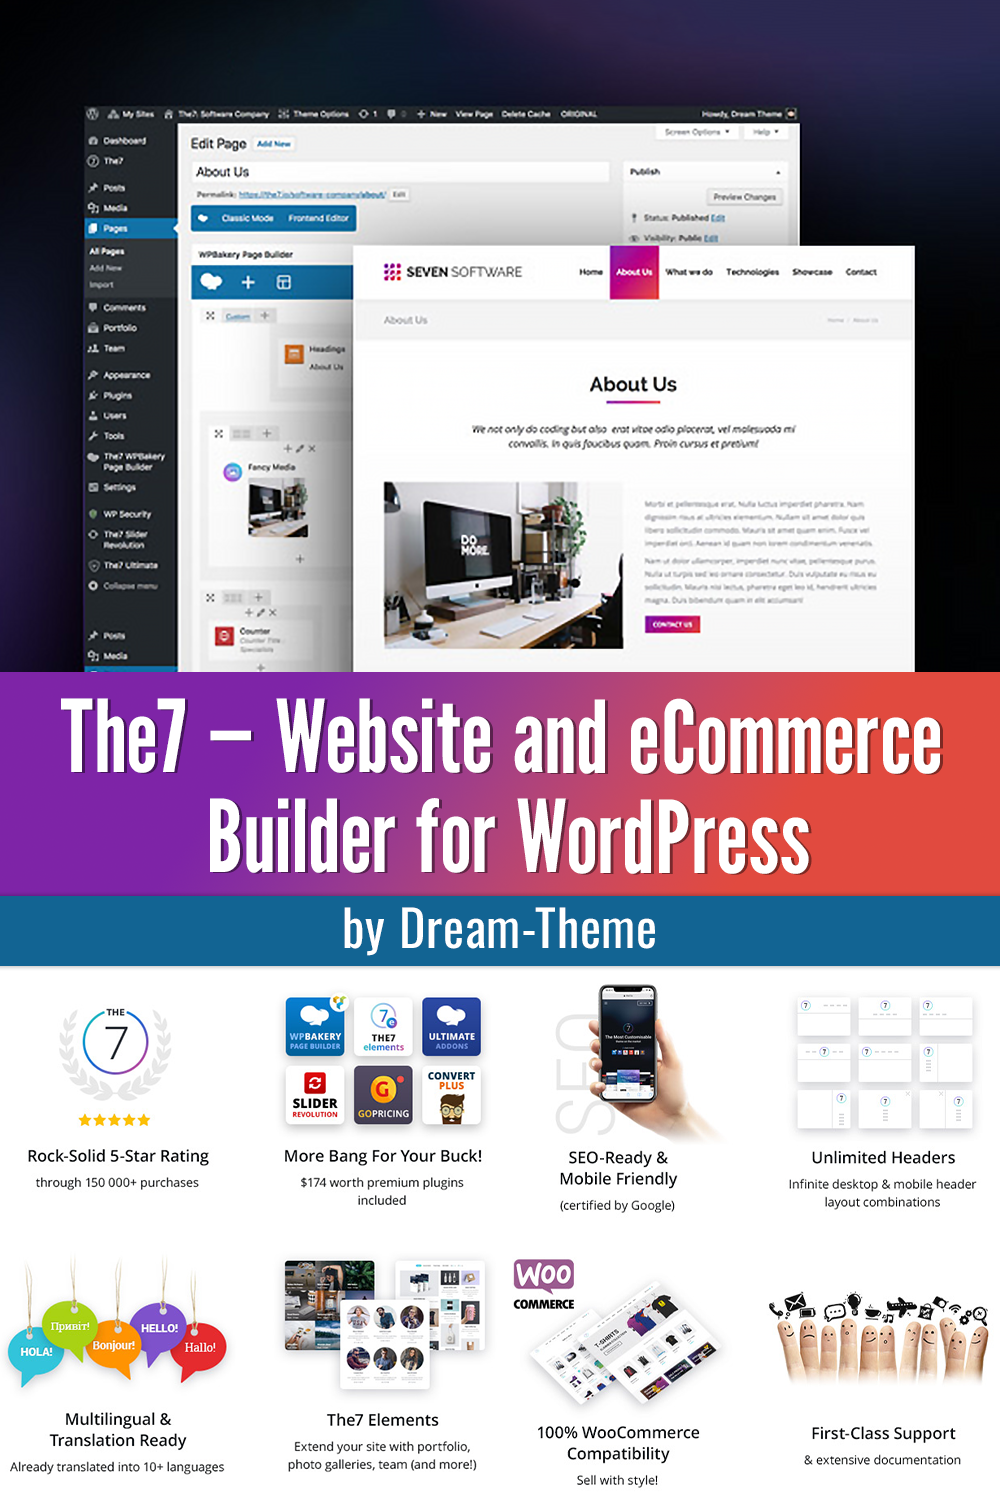 Pinterest of website and ecommerce builder for wordpress.